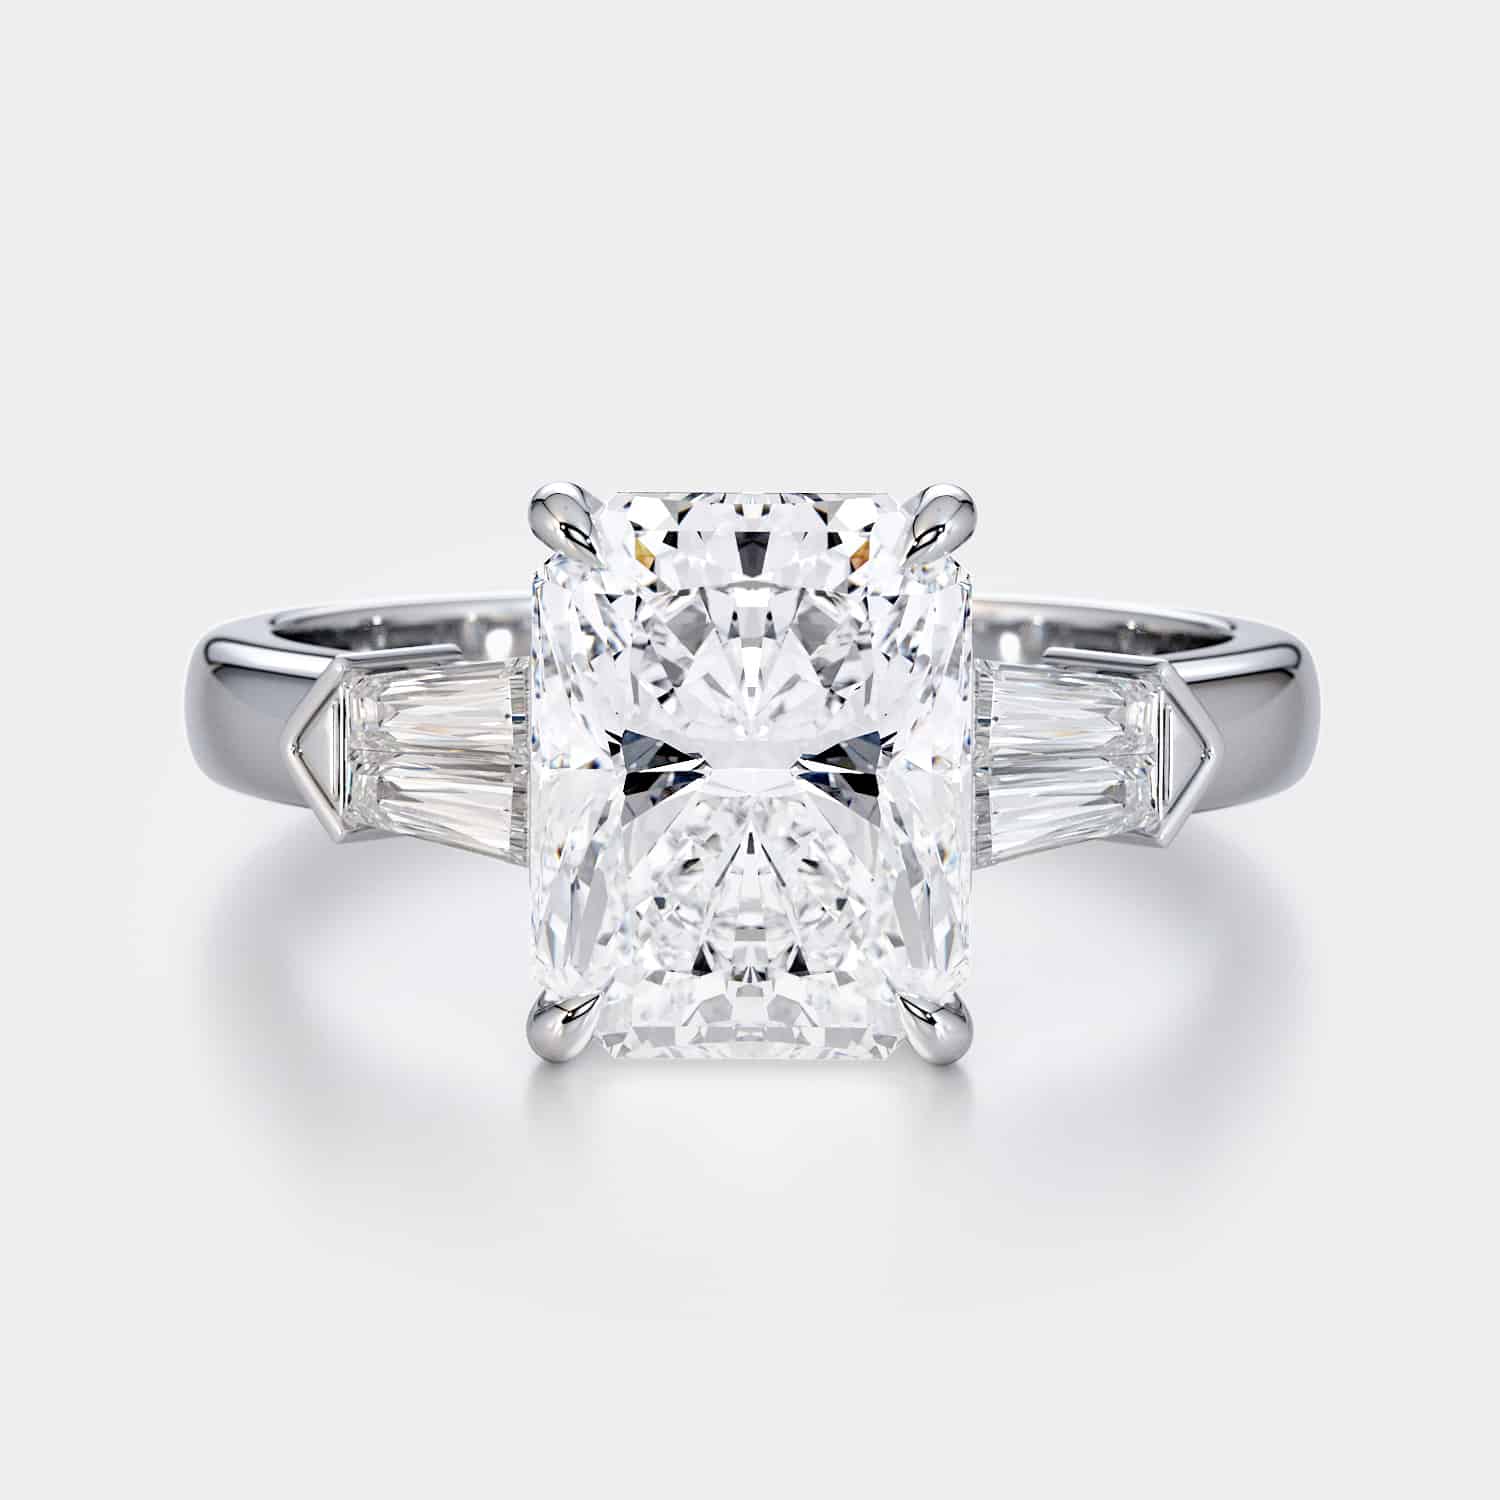 Radiant Cut Diamond Ring 2 Carat on a white background